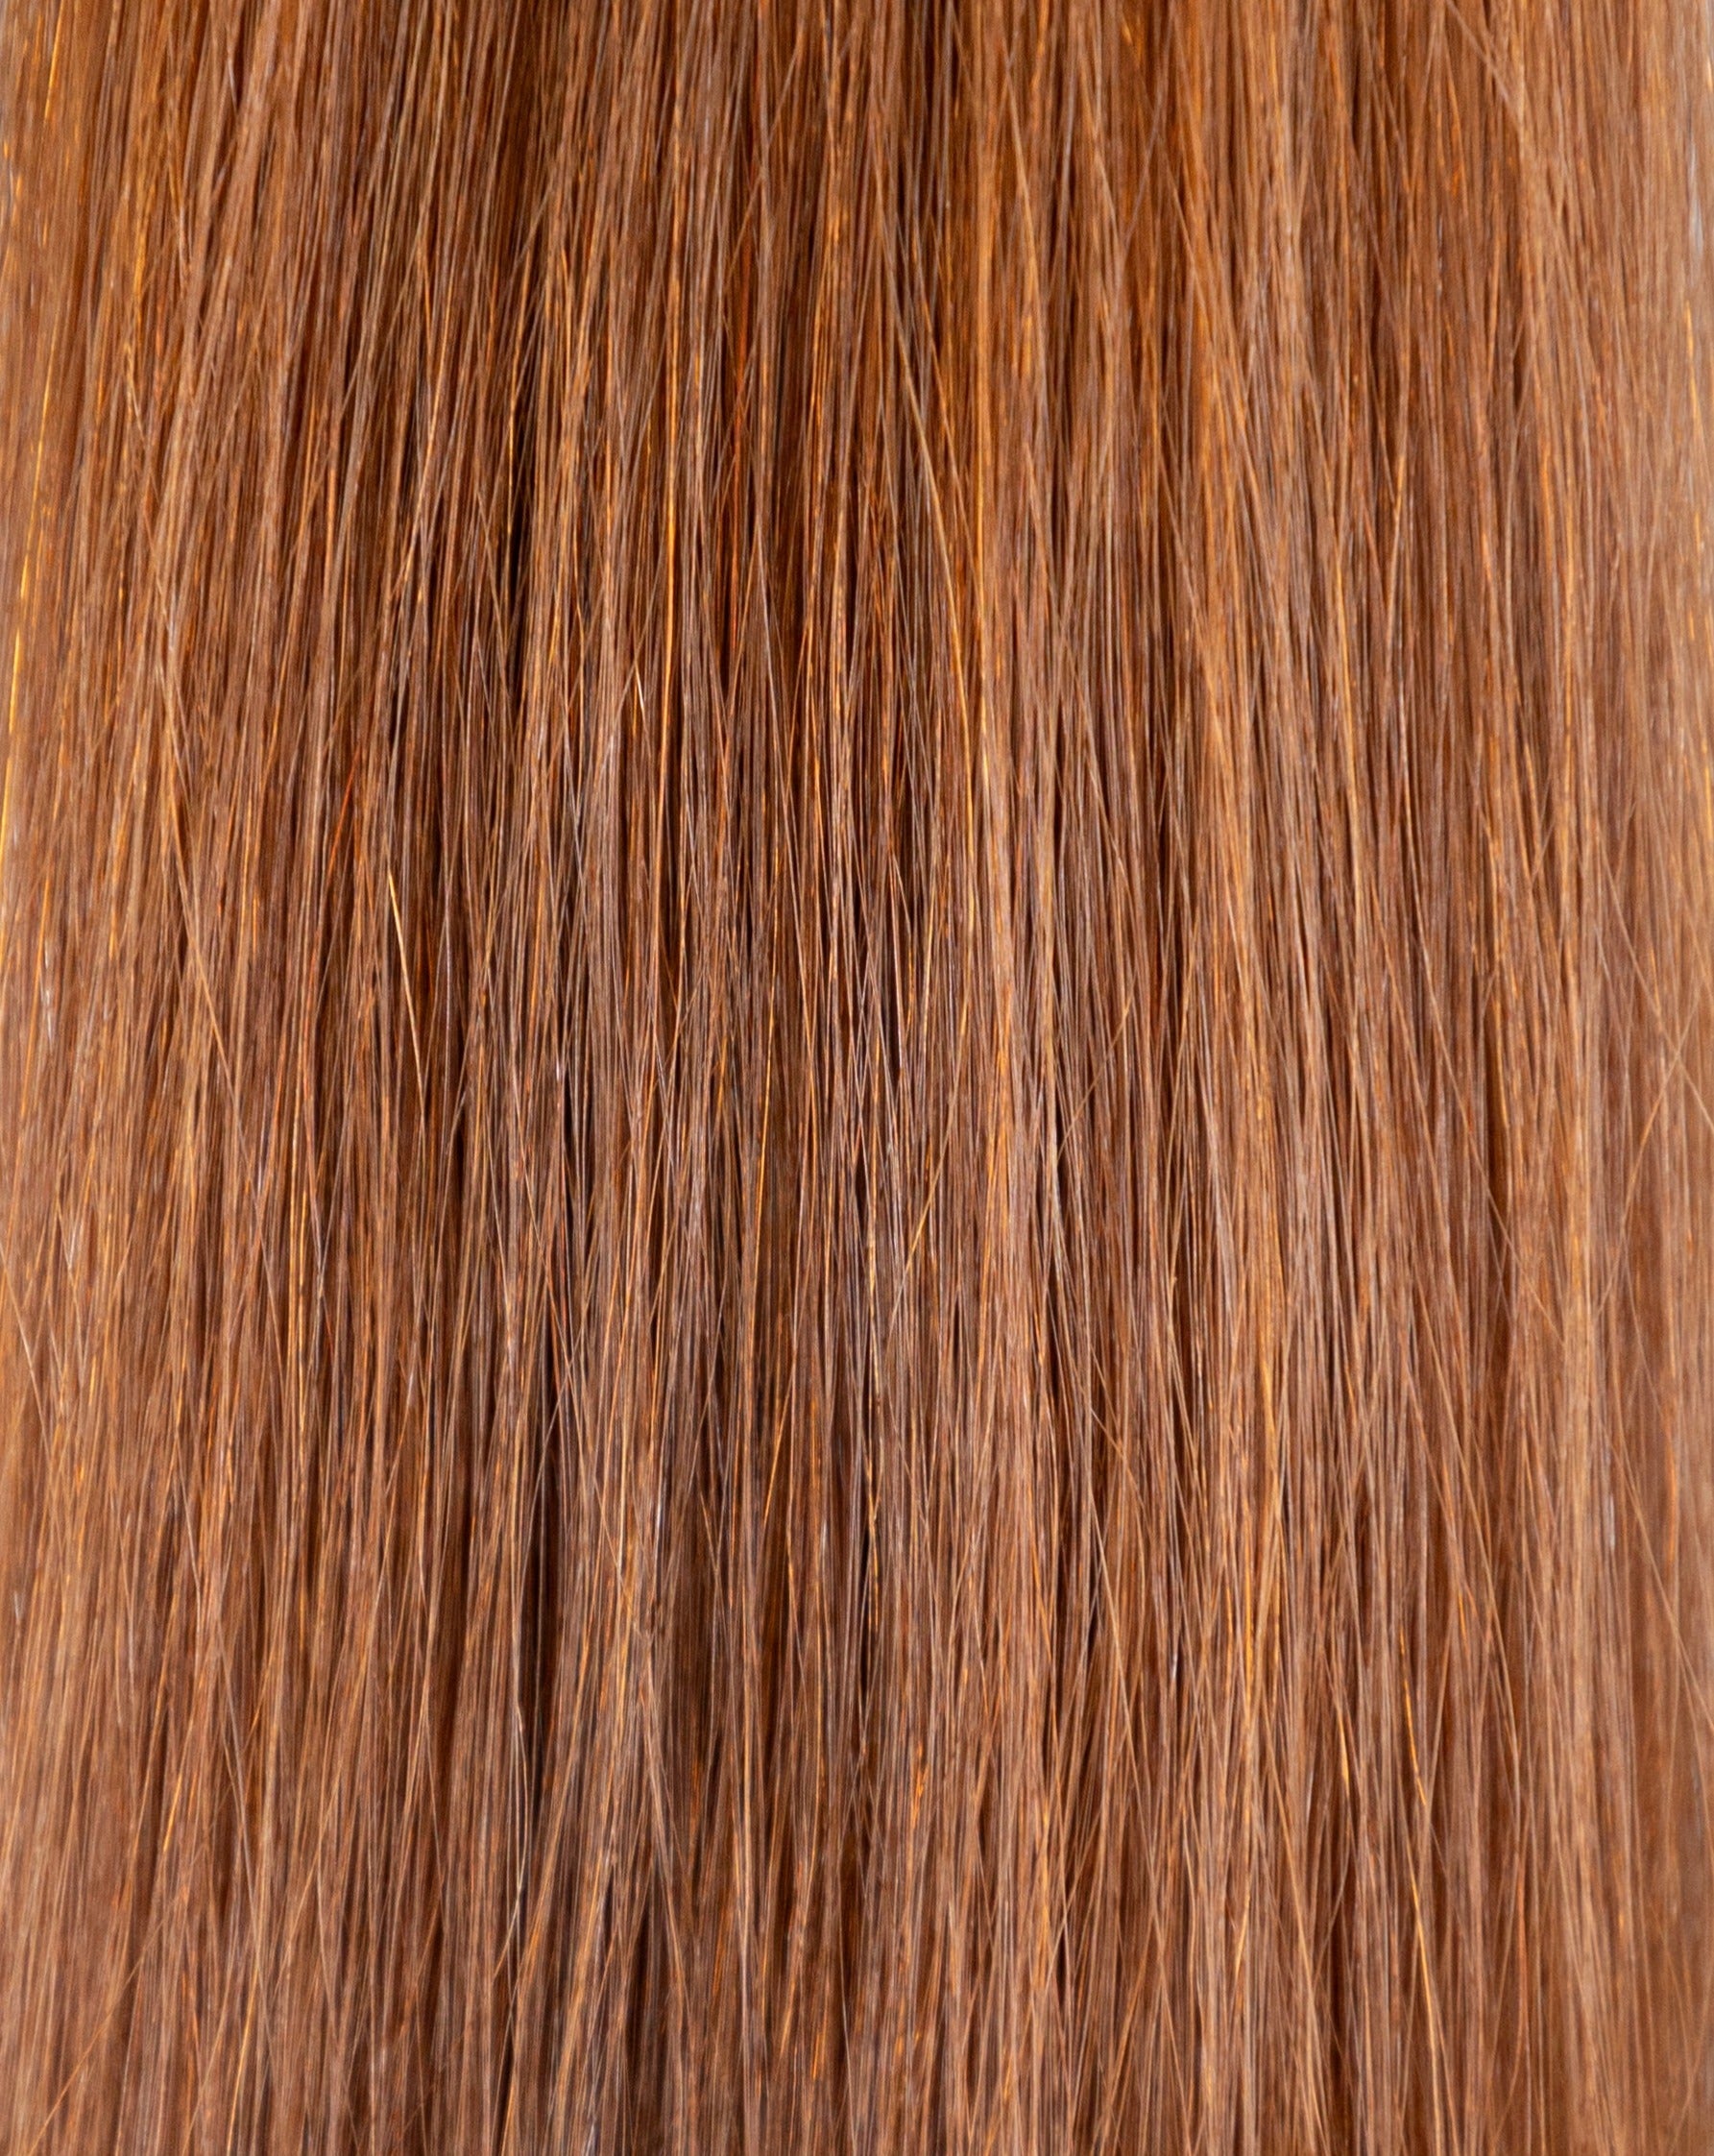 100% Remy european virgin hair extensions bulk 